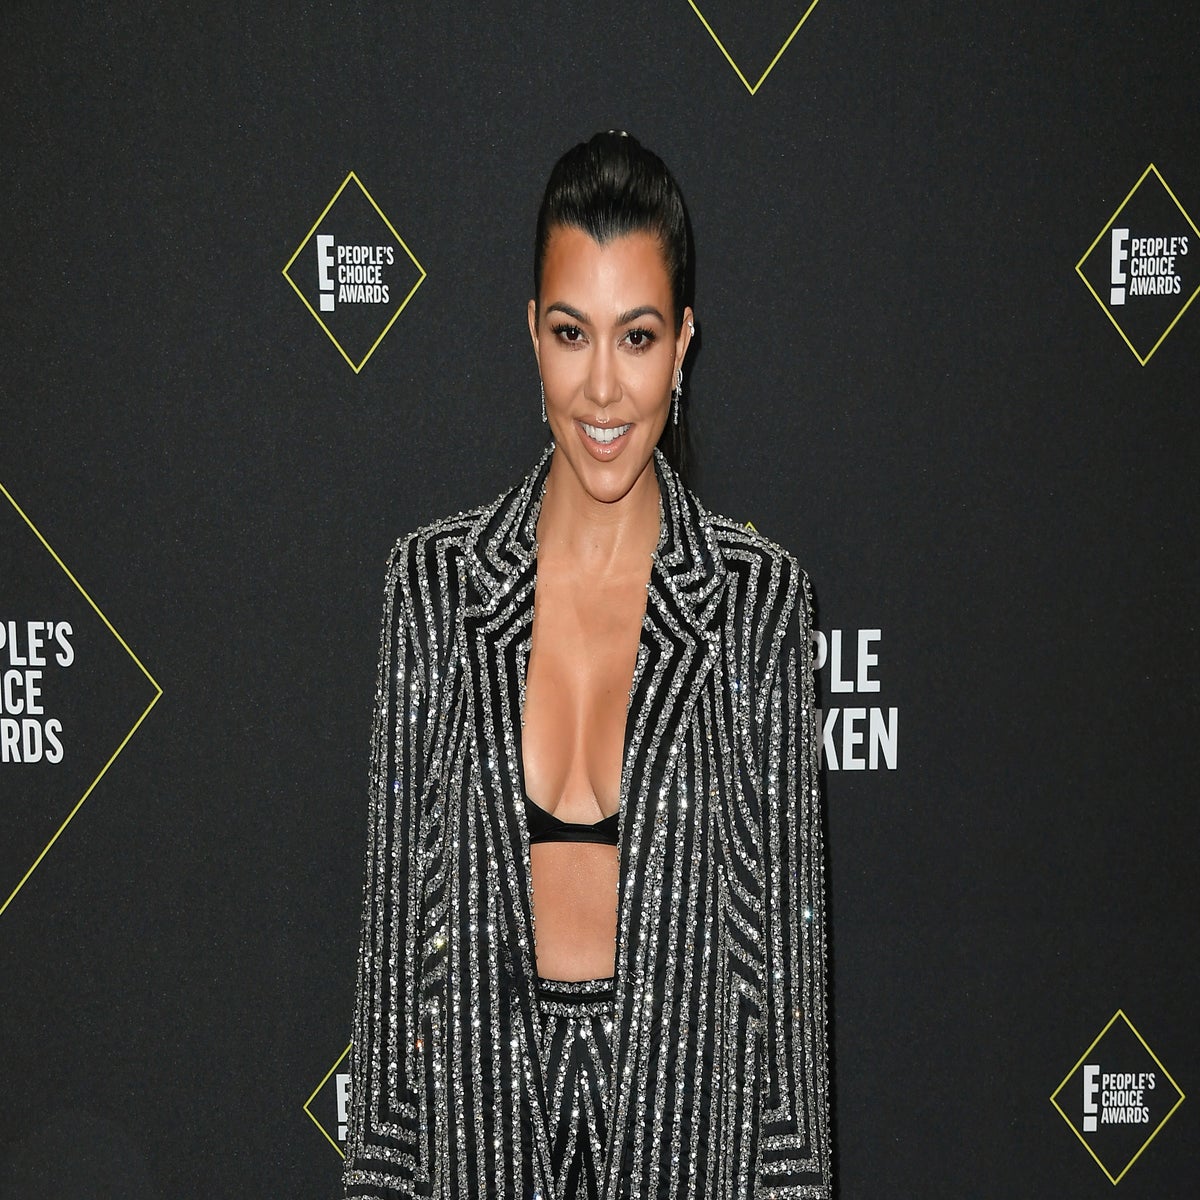 Kourtney Kardashian Shuts Down Pregnancy Rumors in Tight-Fitting Outfit